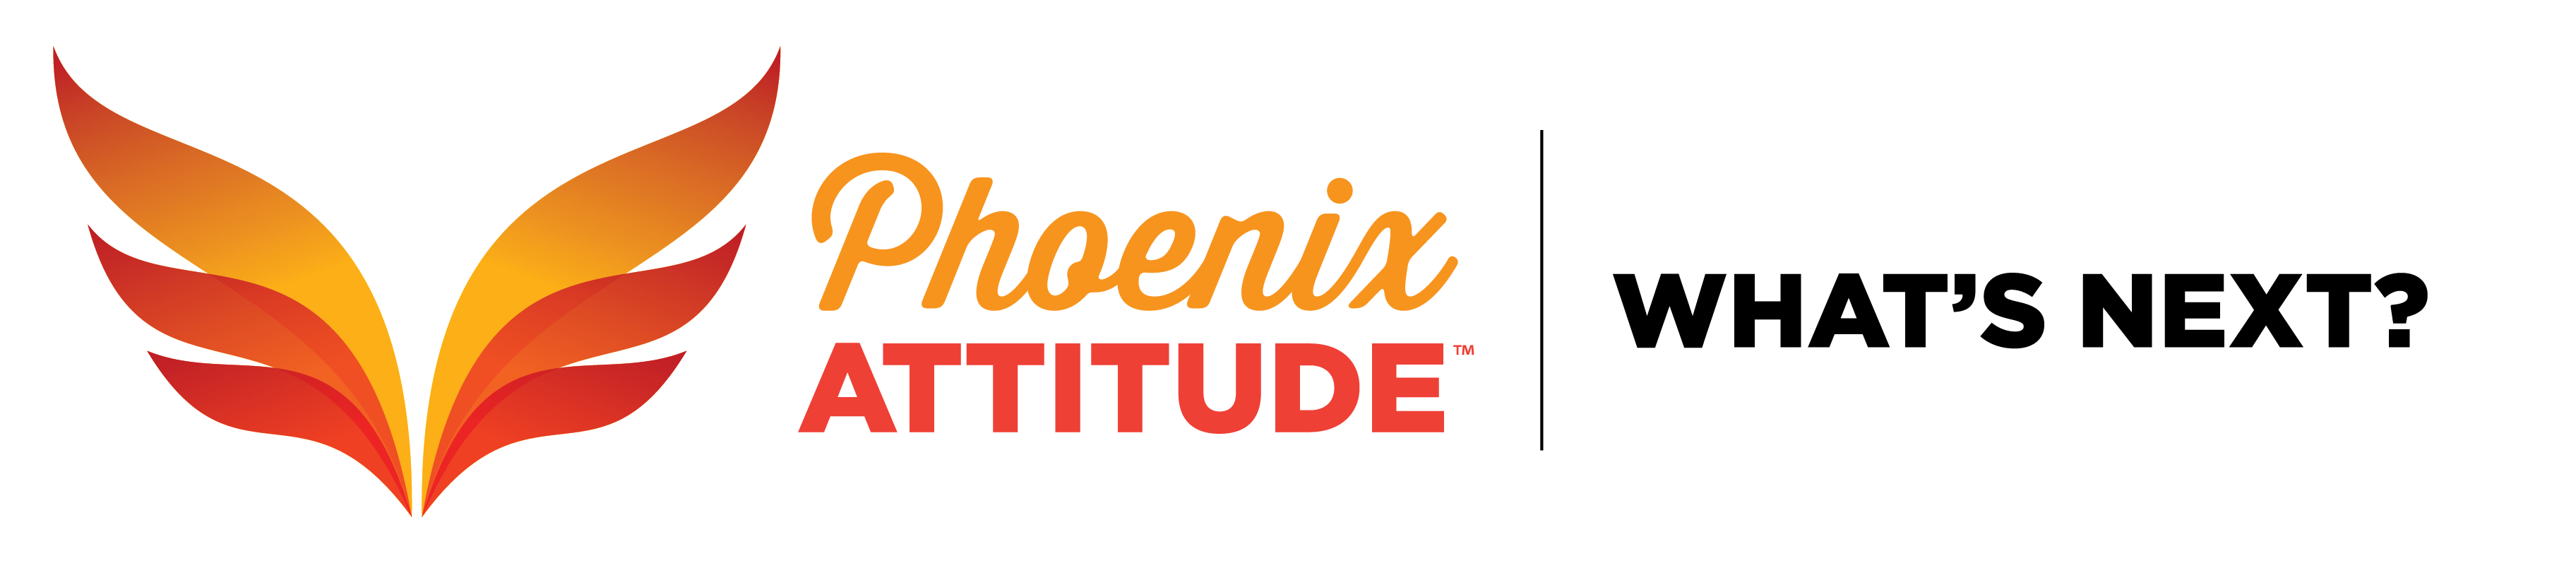 Phoenix Attitude logo, tagline, What's Next?